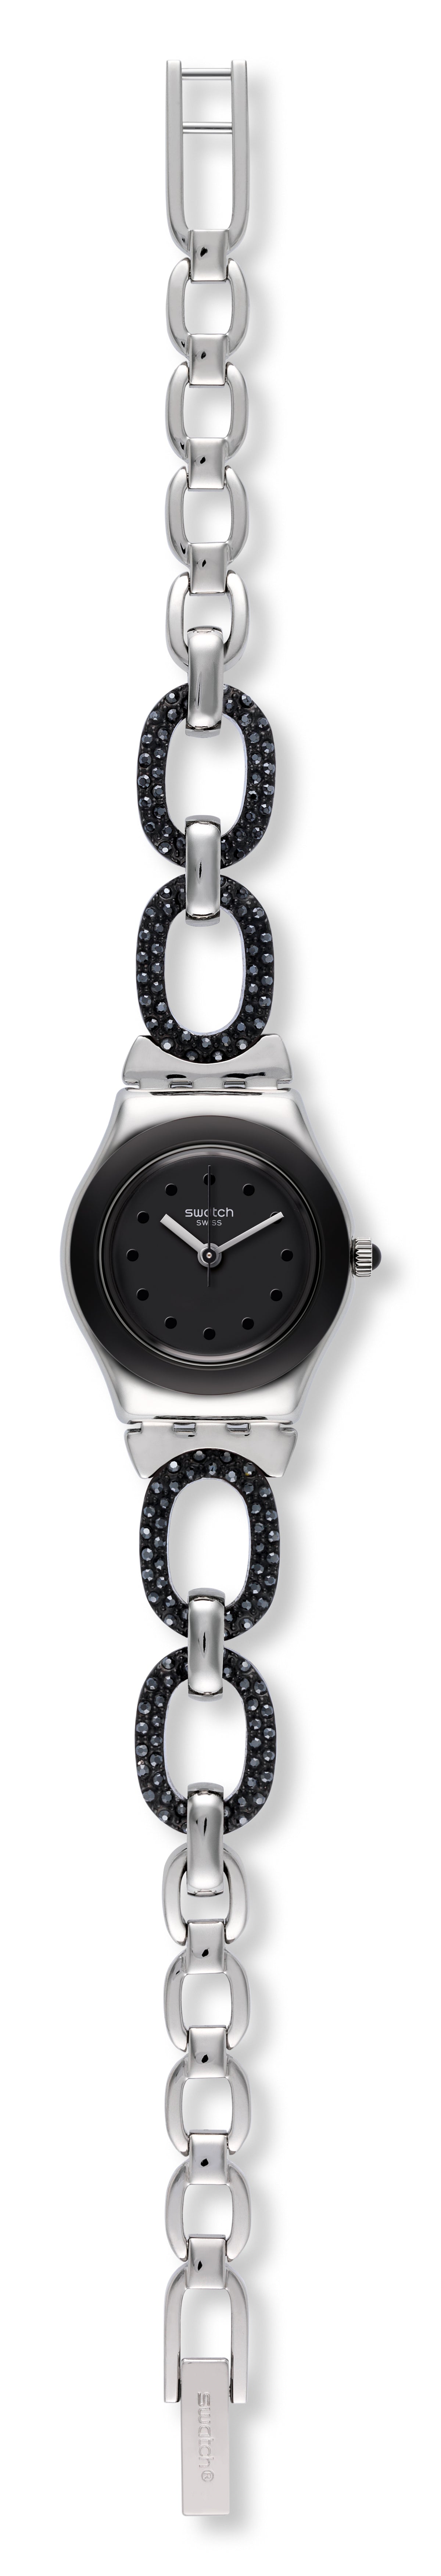 Swatch Irony Watch - Black Glitter